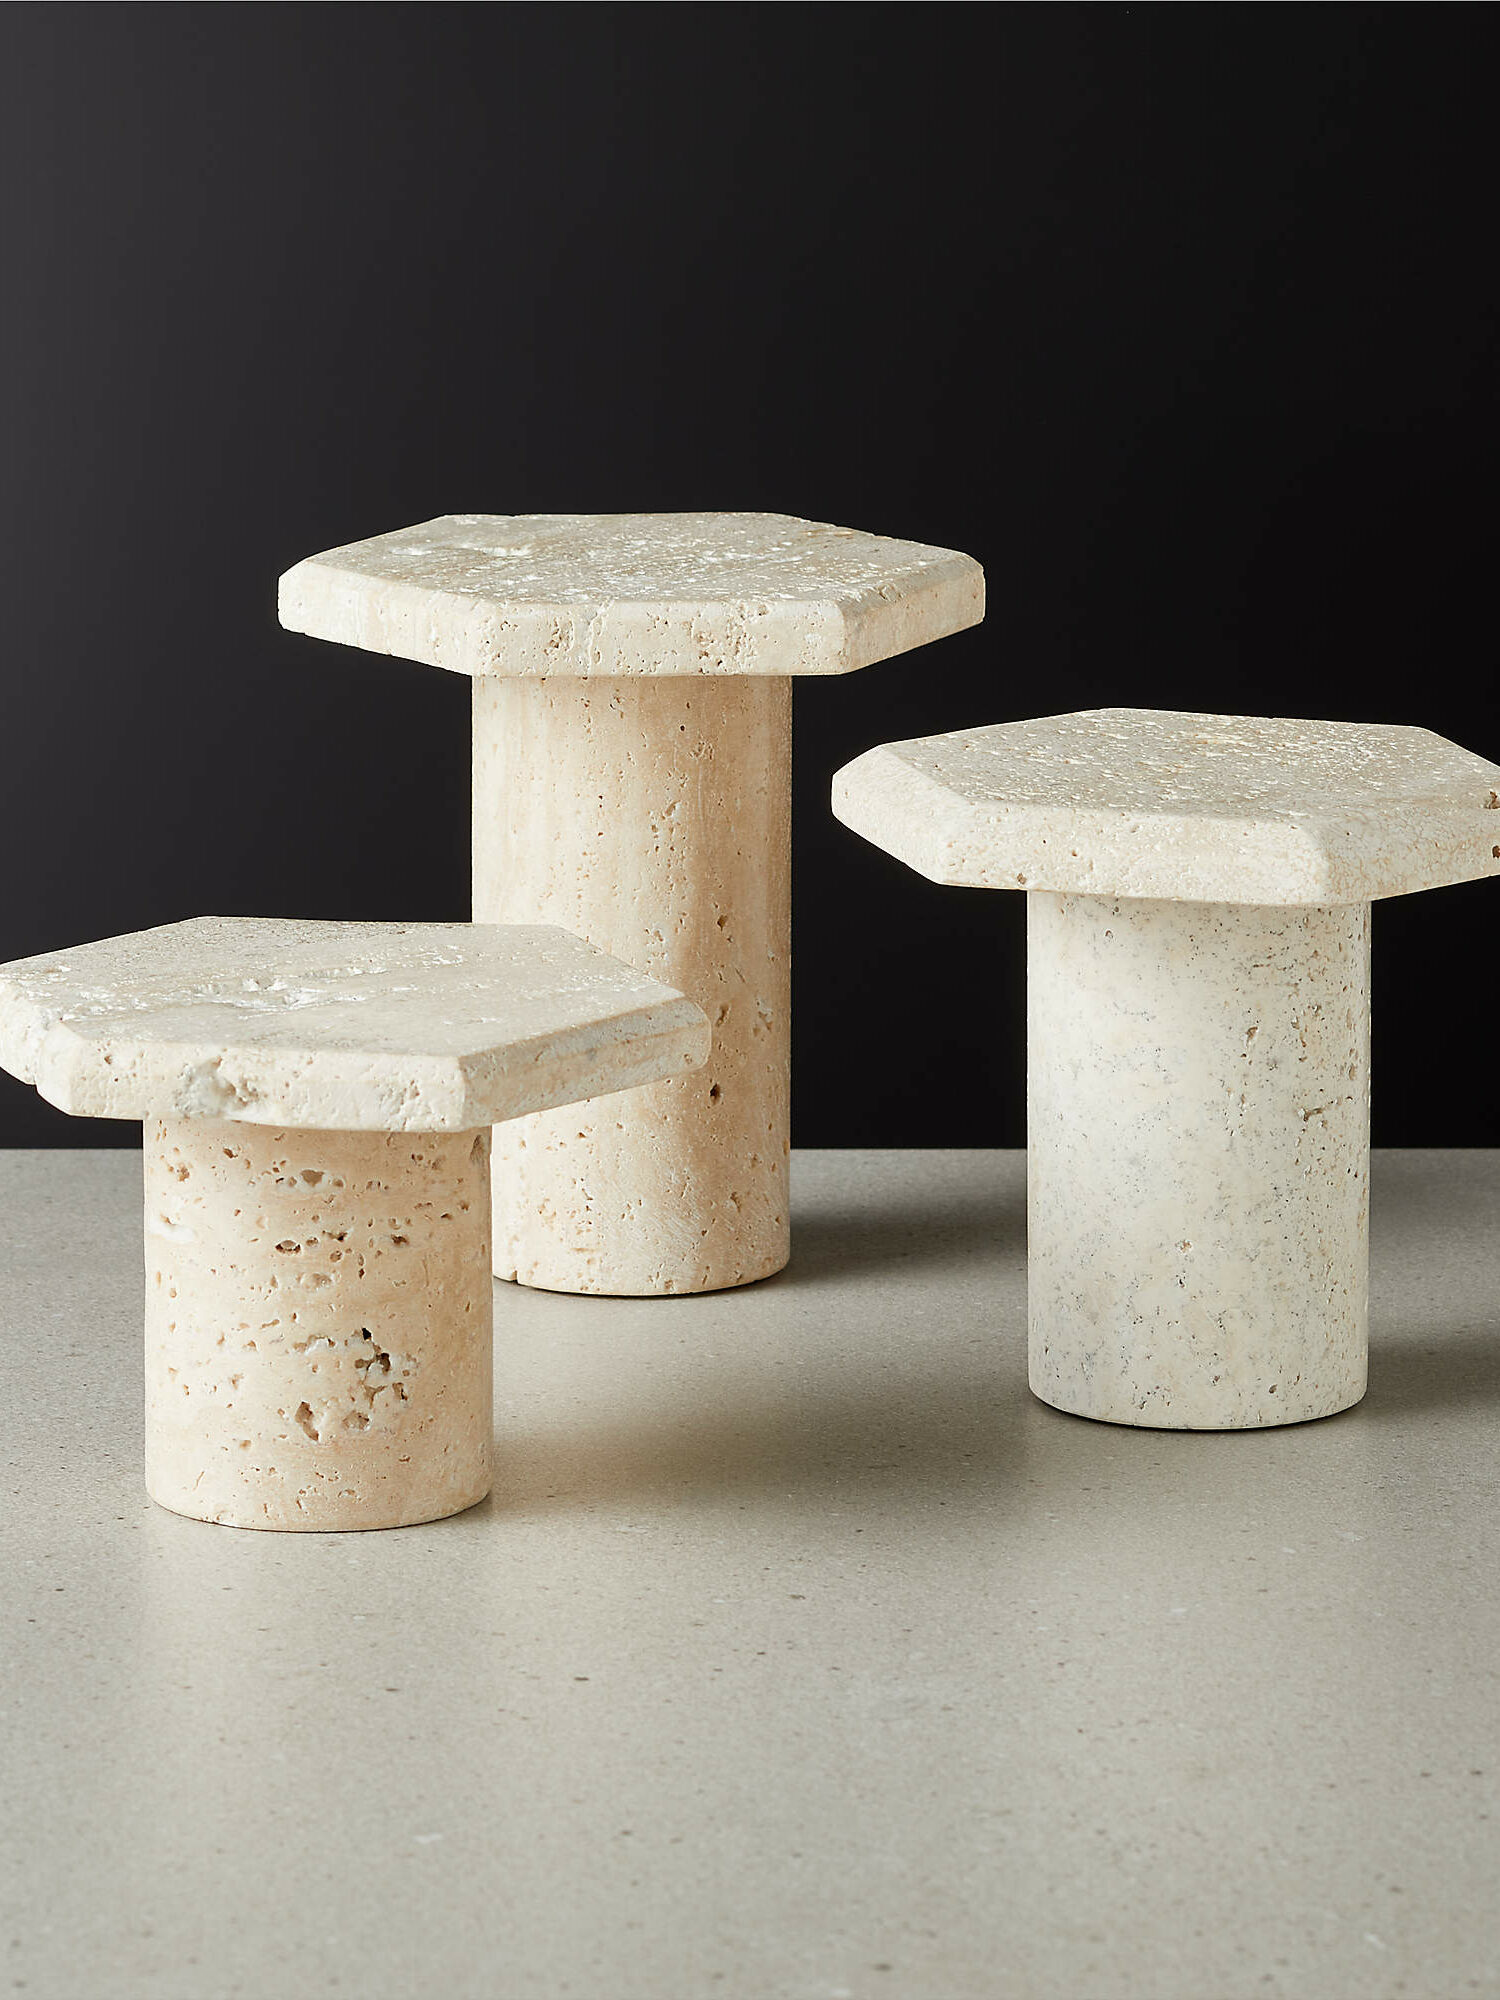 Travertine candle holder pedestals in a natural, sandy tone